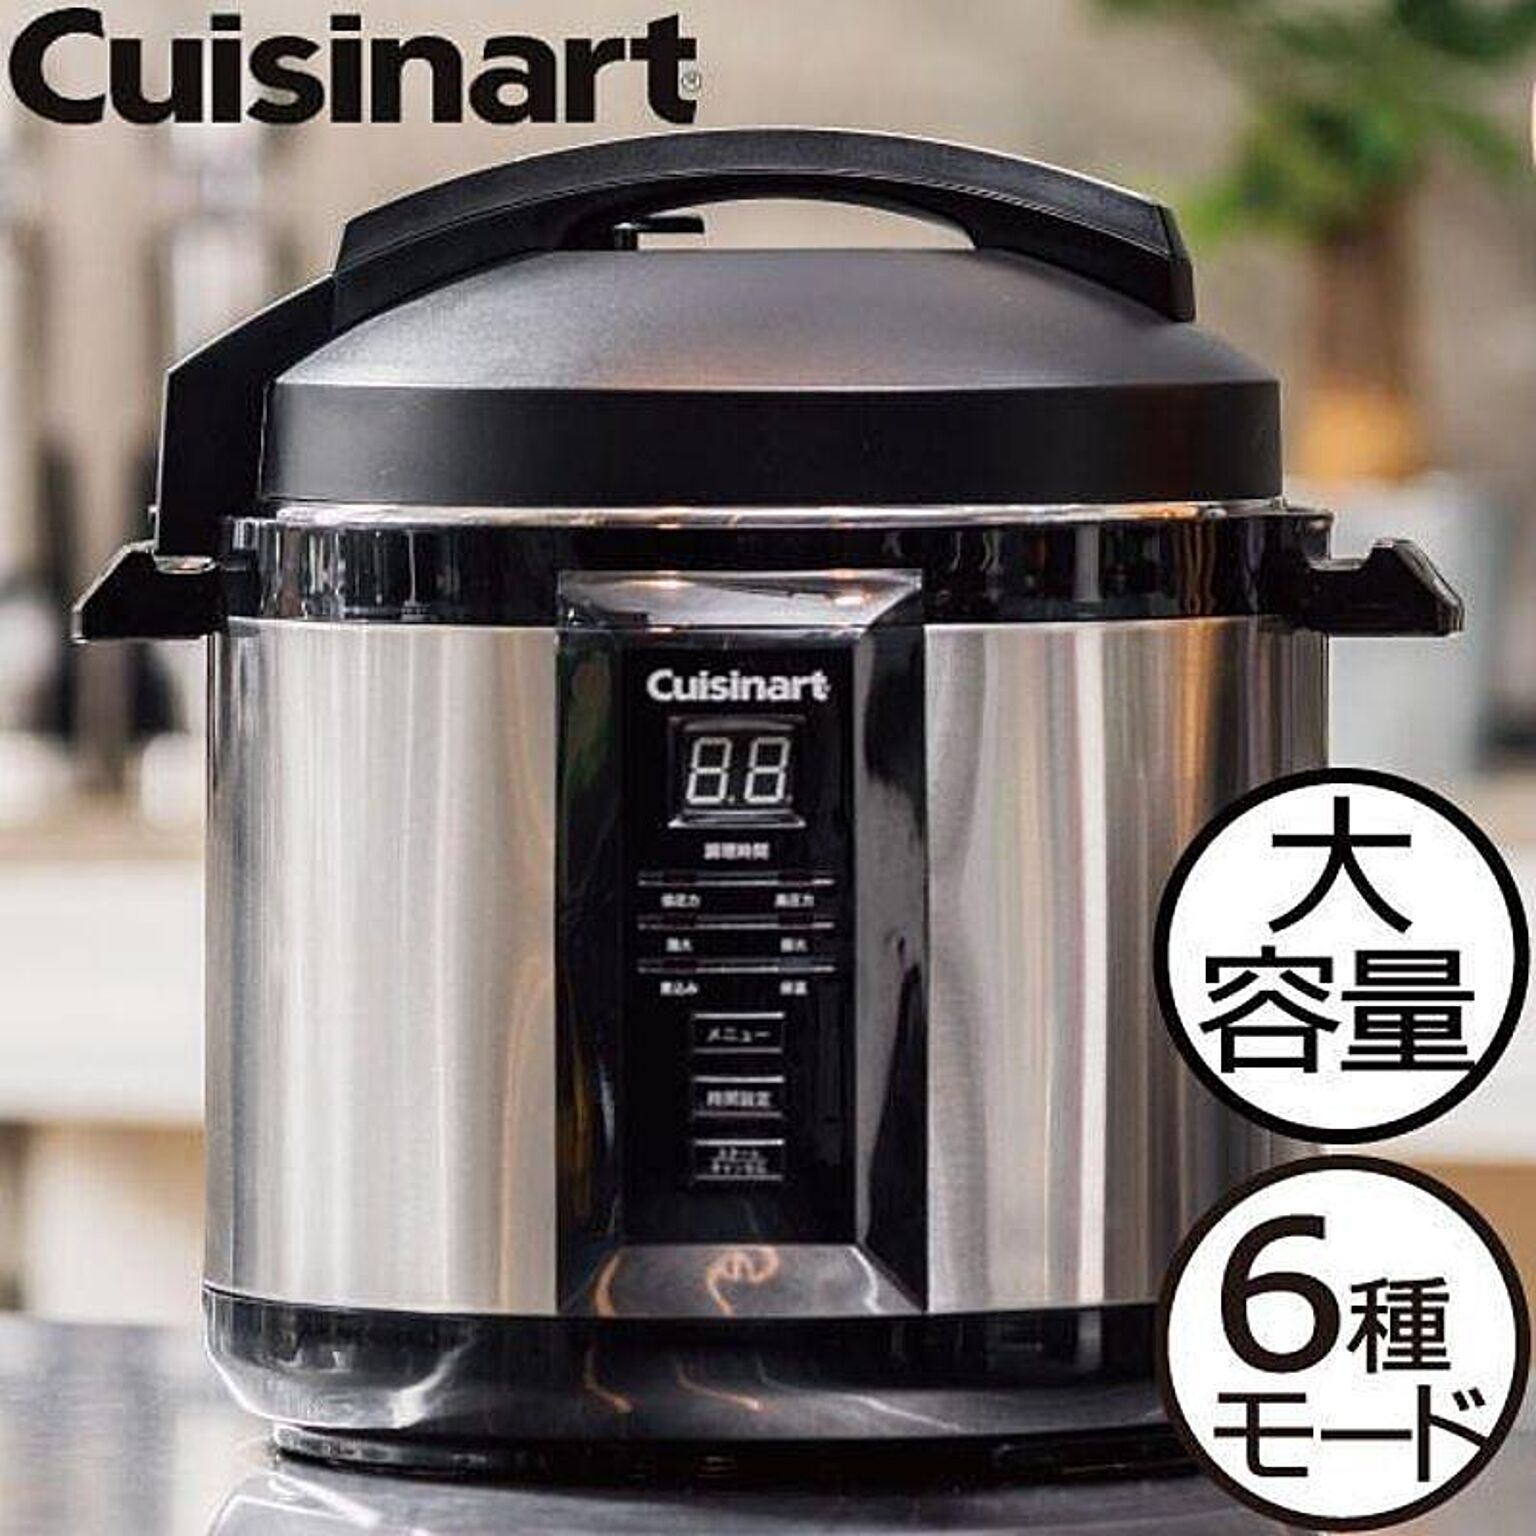 Cuisinart / 電気圧力鍋